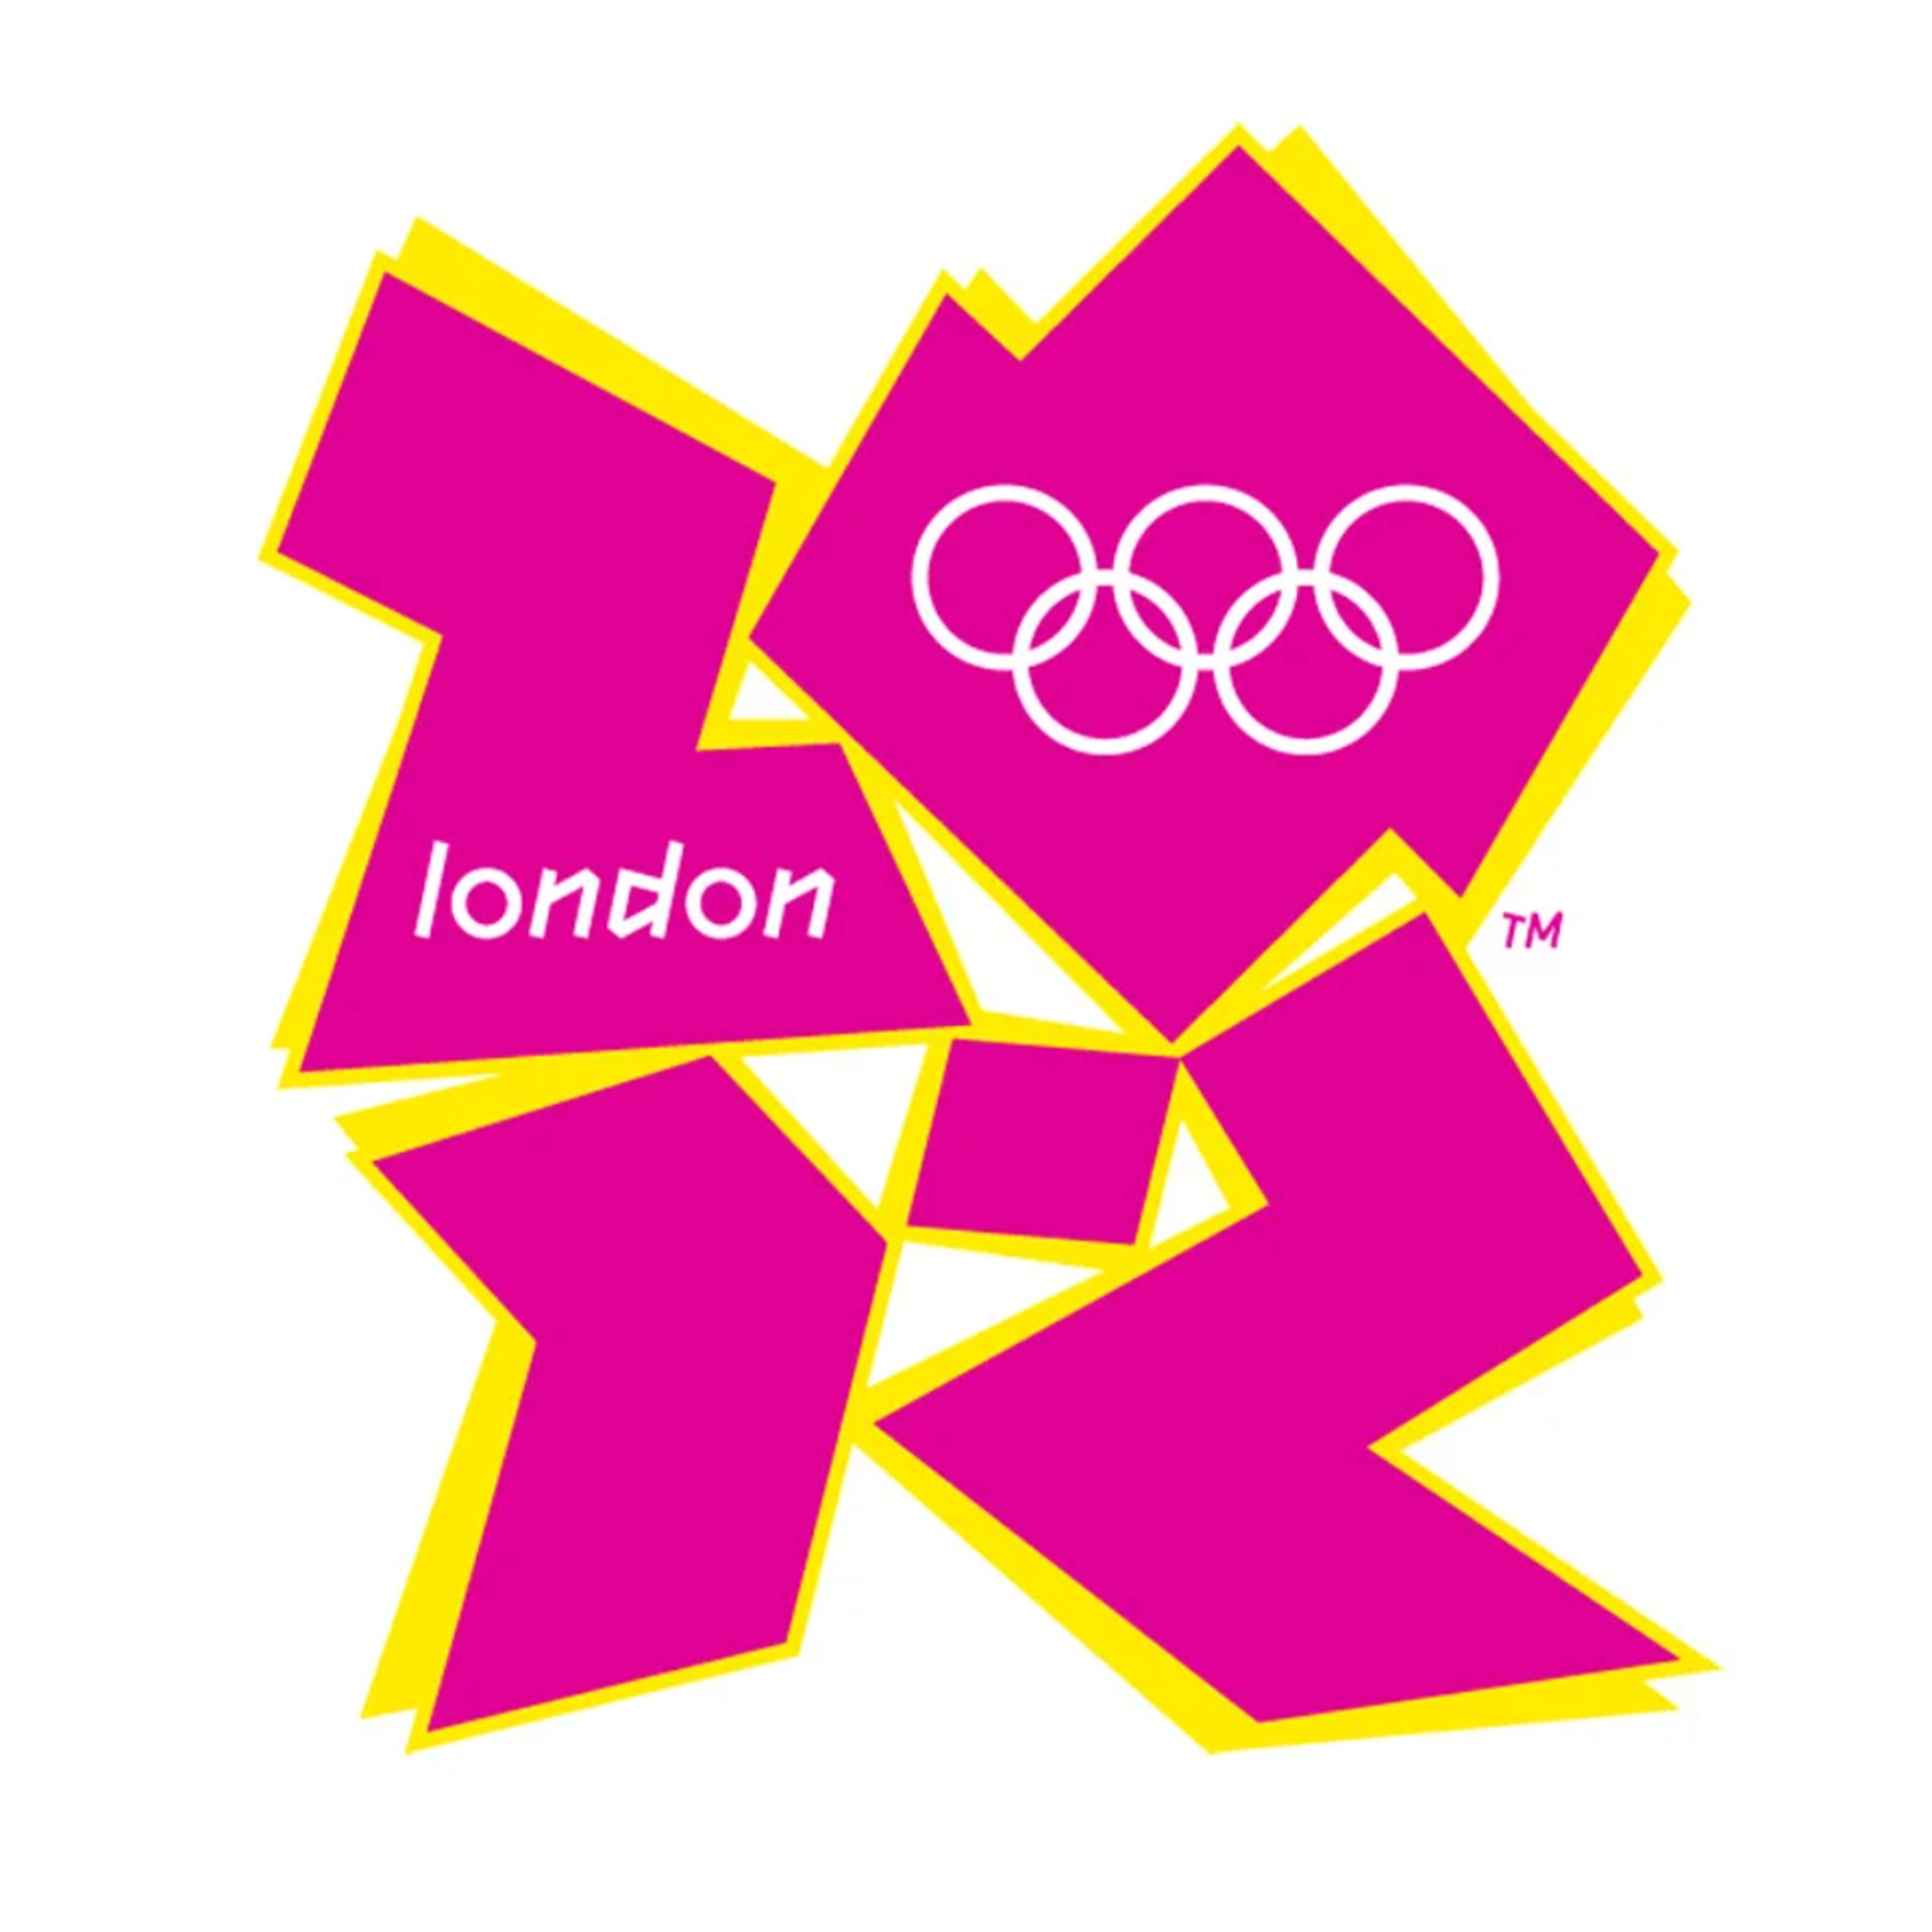 london olympic logo 2012 geometric bright powerful